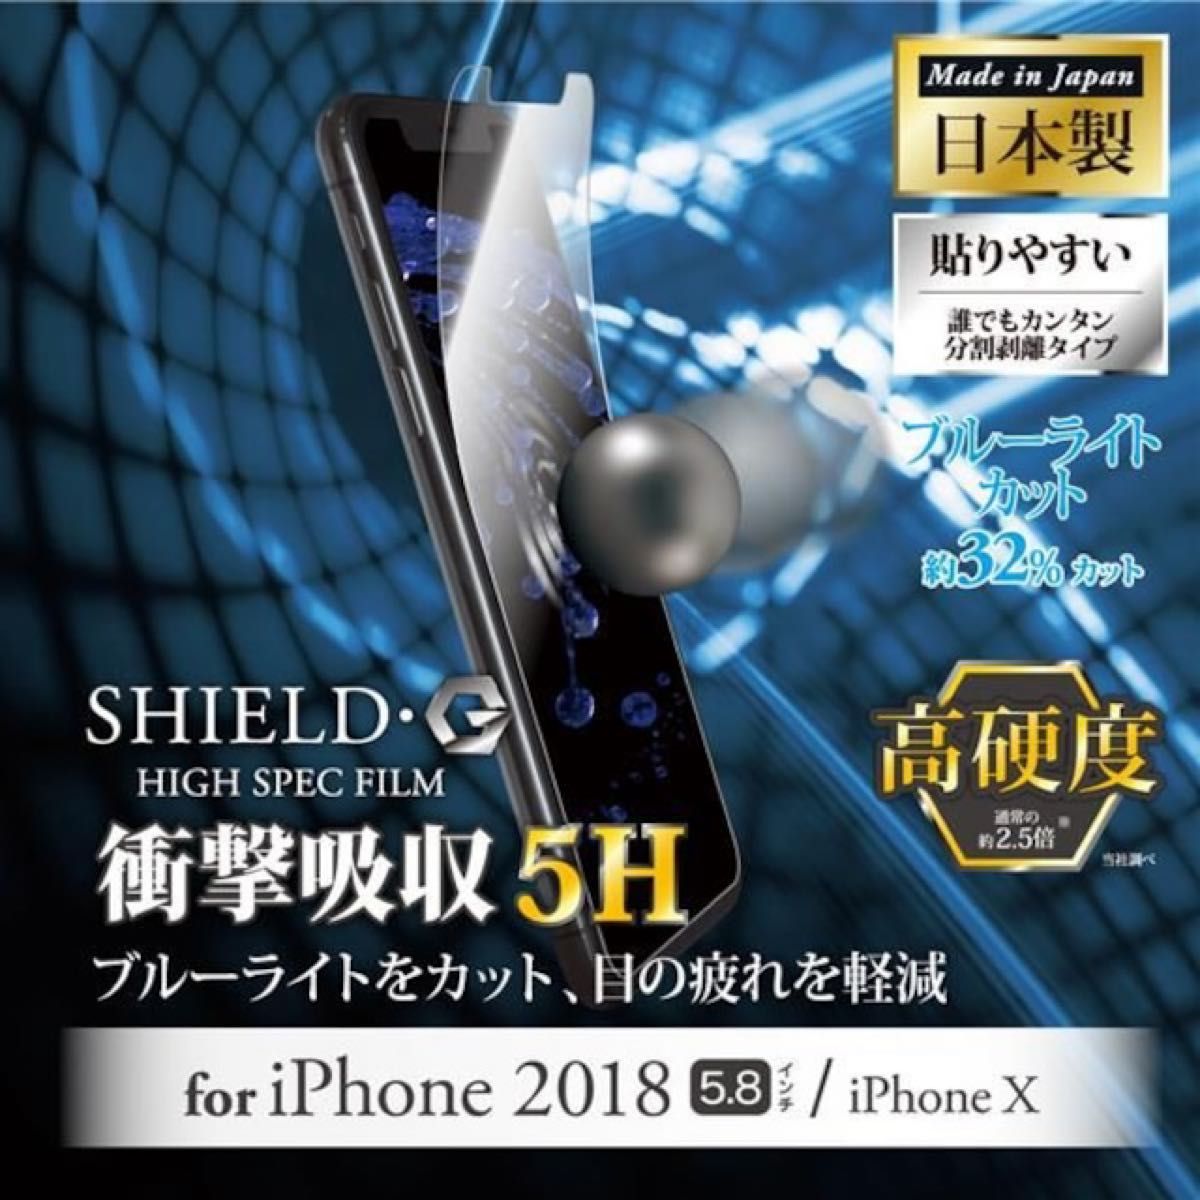 iPhone X XS 11Pro 保護フィルム SHIELD・G HIGH SPEC FILM 高光沢 高硬度 5H 